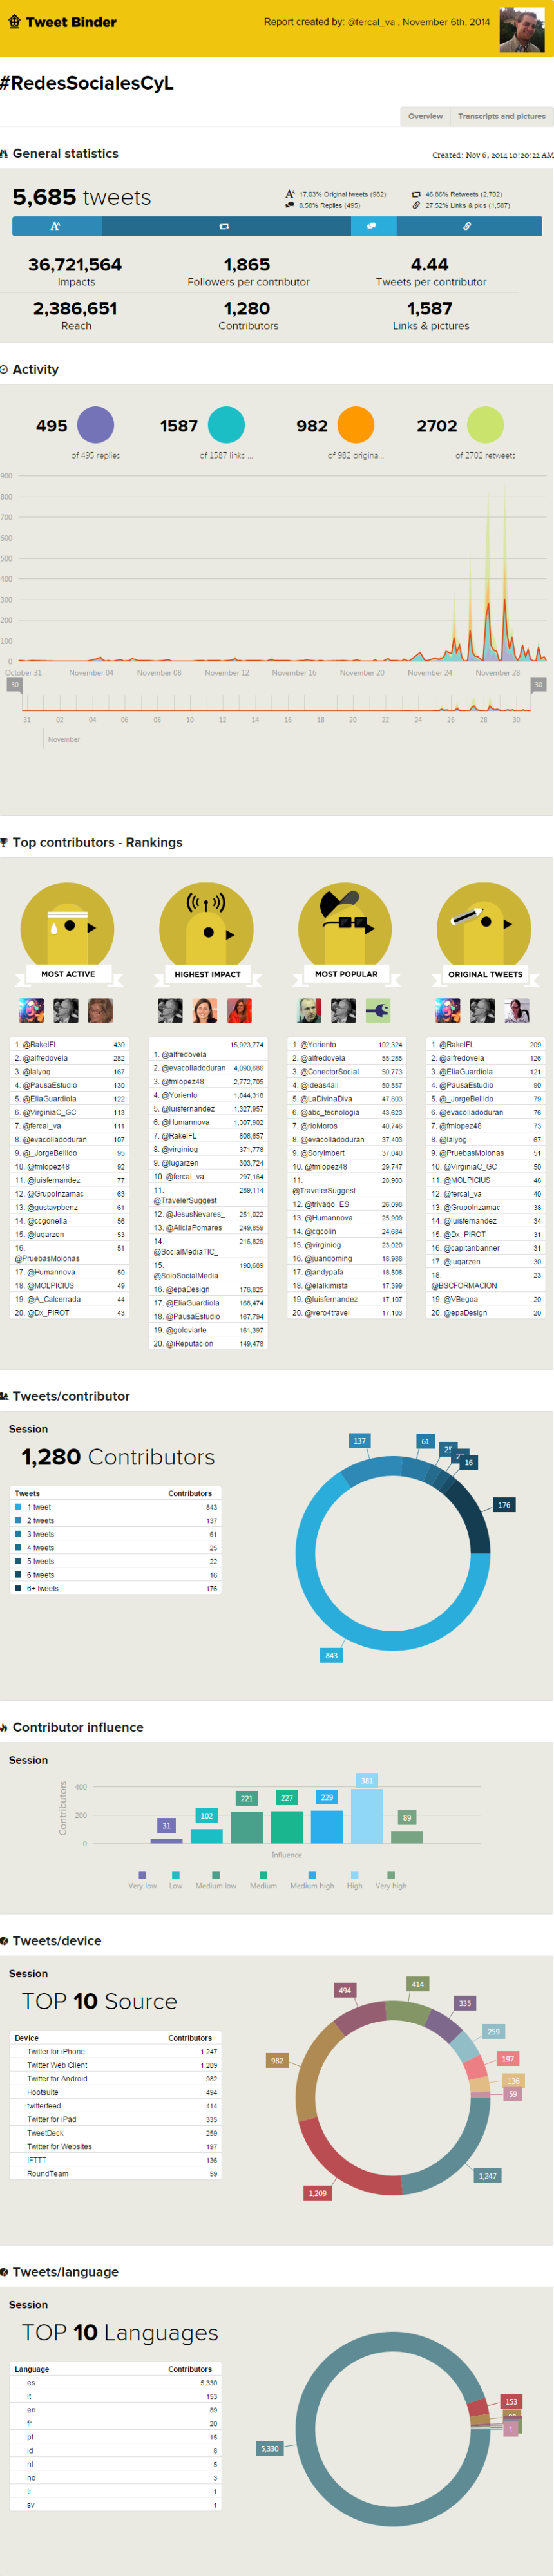 #RedesSocialesCyl 2014: Estadísticas en Twitter